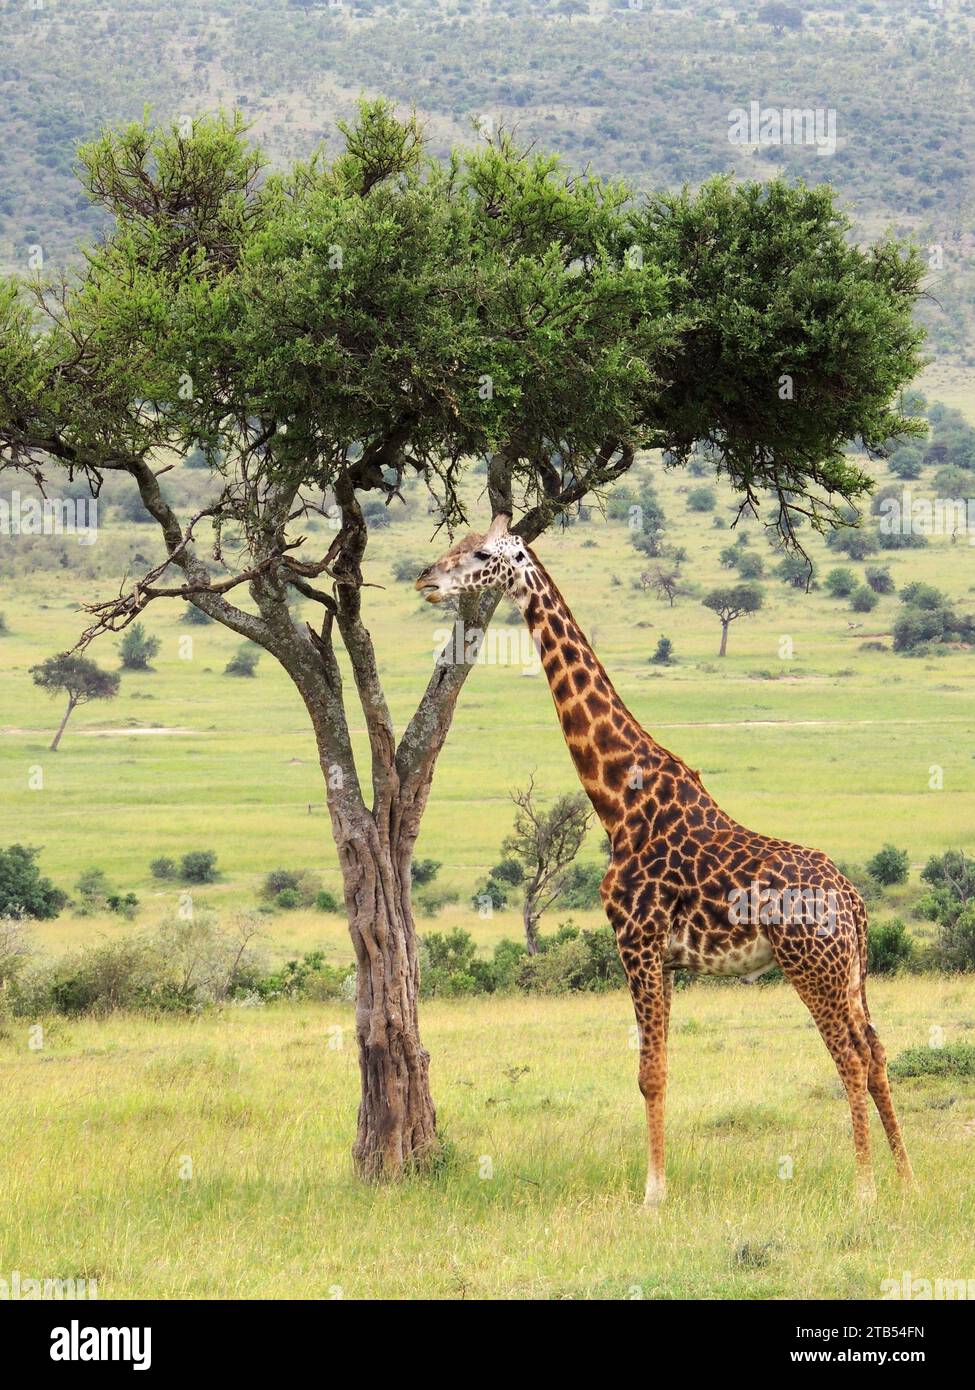 a  giraffe standing next to an acacia  tree on safari in maasai mara, kenya, africa Stock Photo